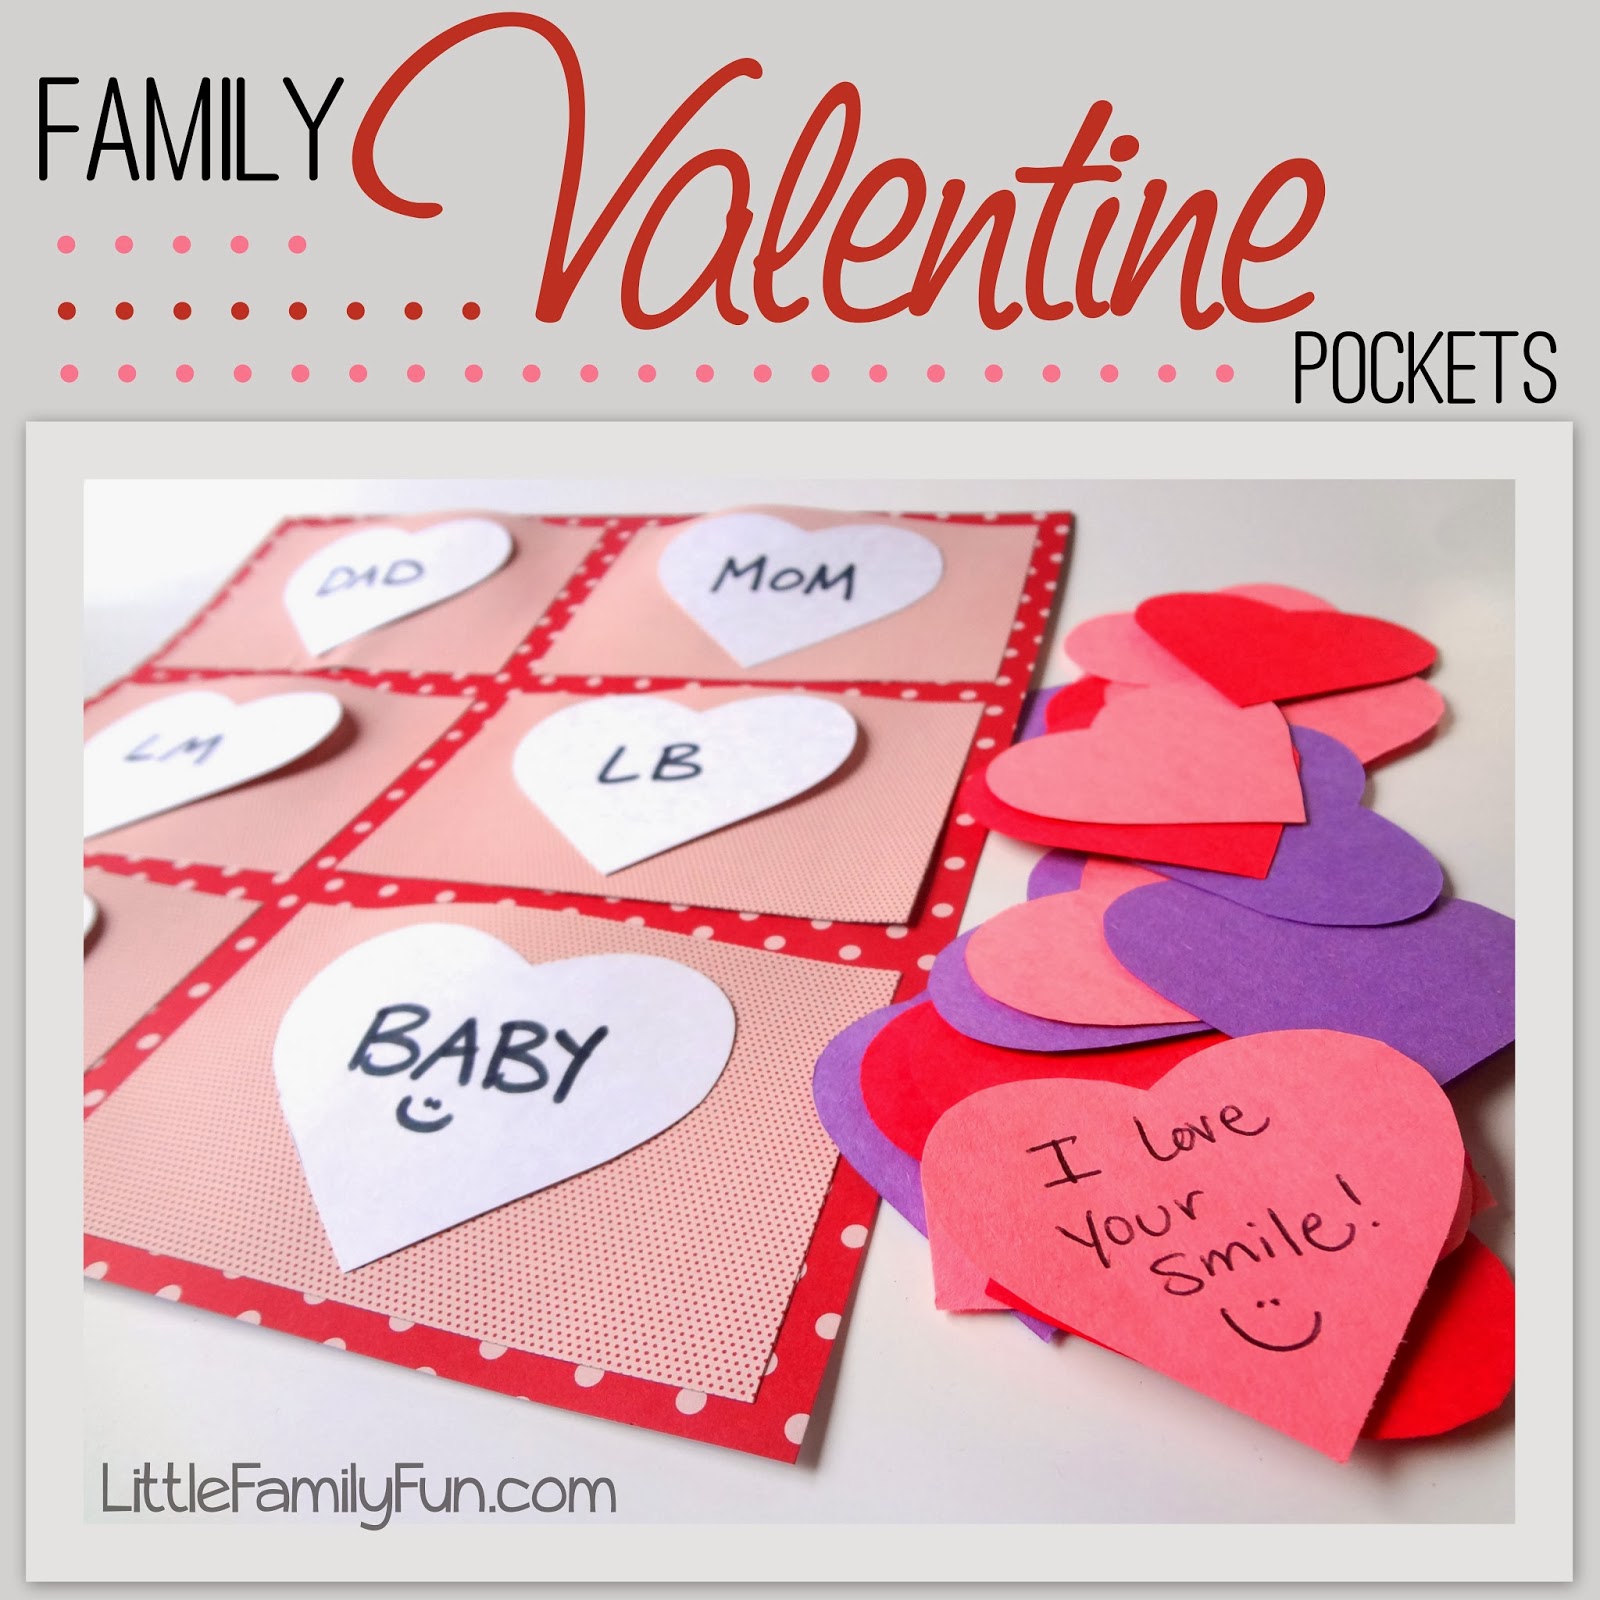 http://www.littlefamilyfun.com/2014/02/family-valentine-pockets.html